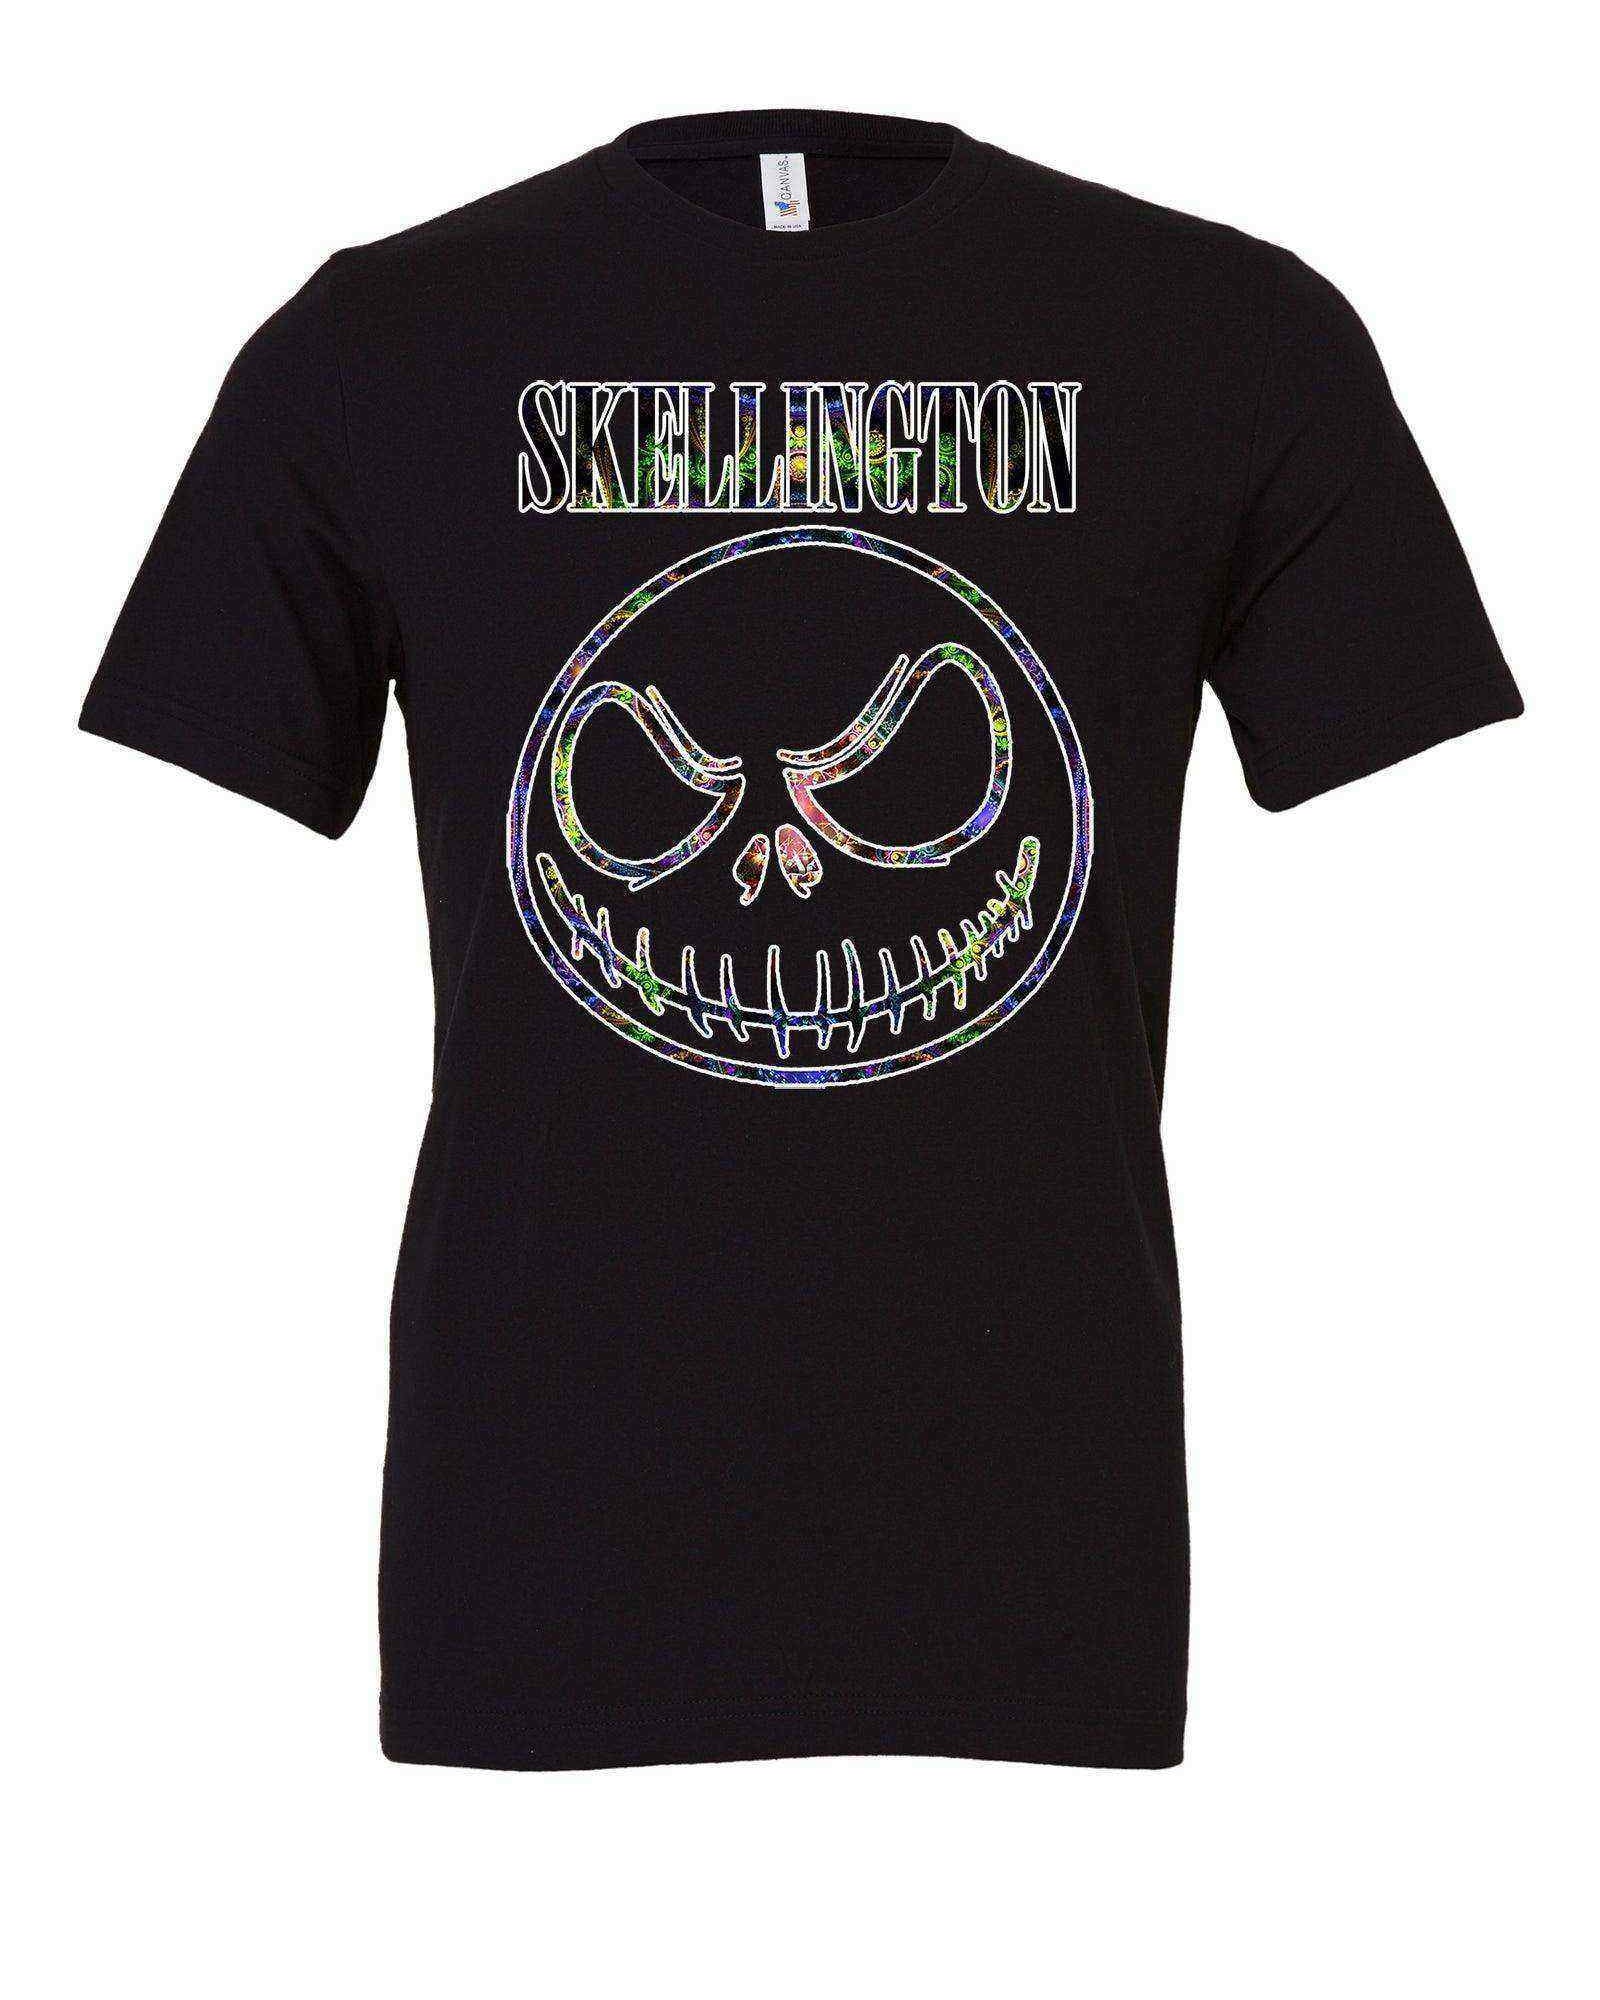 Skellington/Nirvana Graffiti Tee | Nightmare Before Christmas Shirt | Halloween Shirt - Dylan's Tees